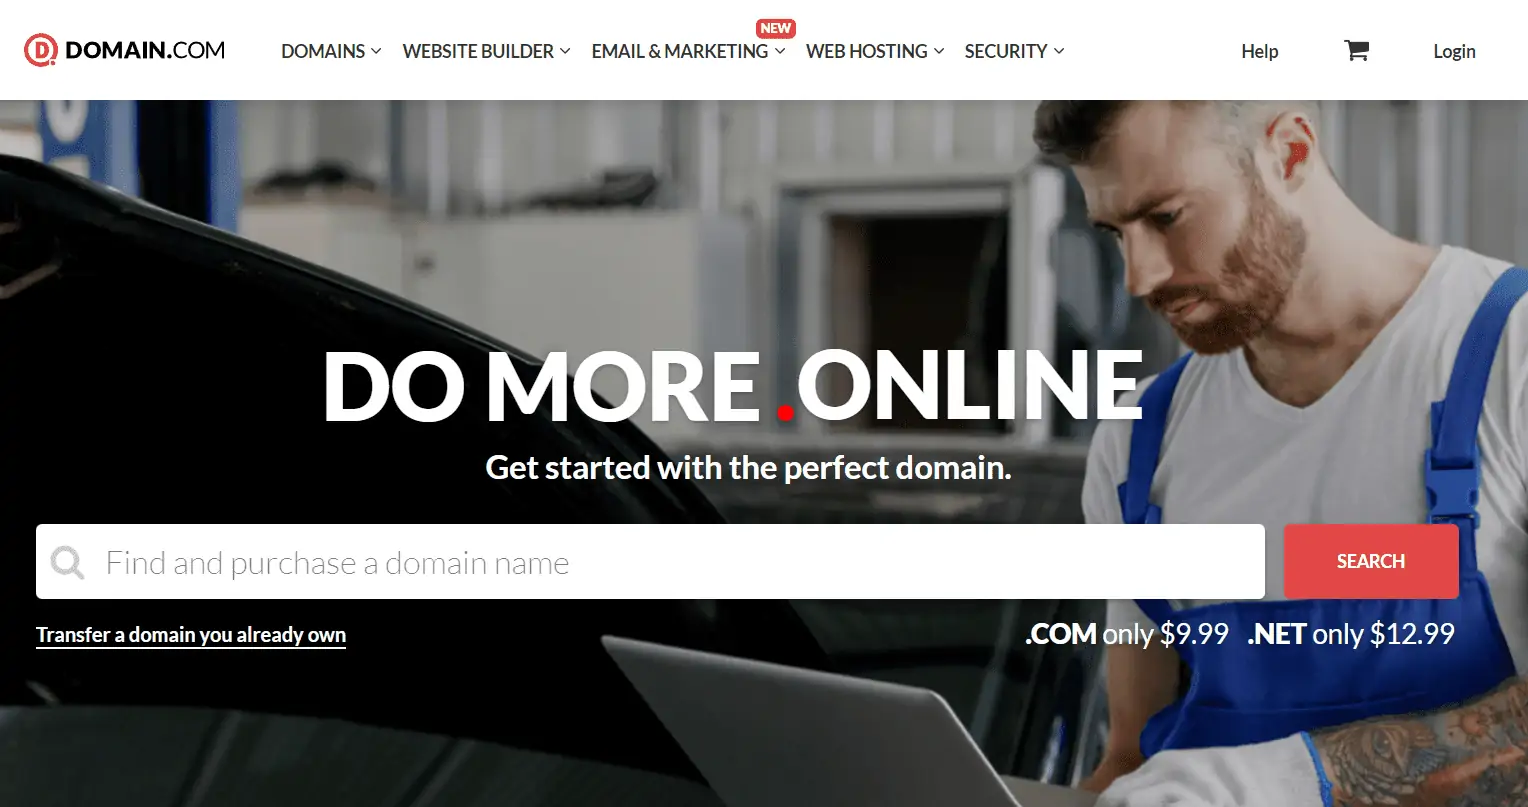 domain.com homepage